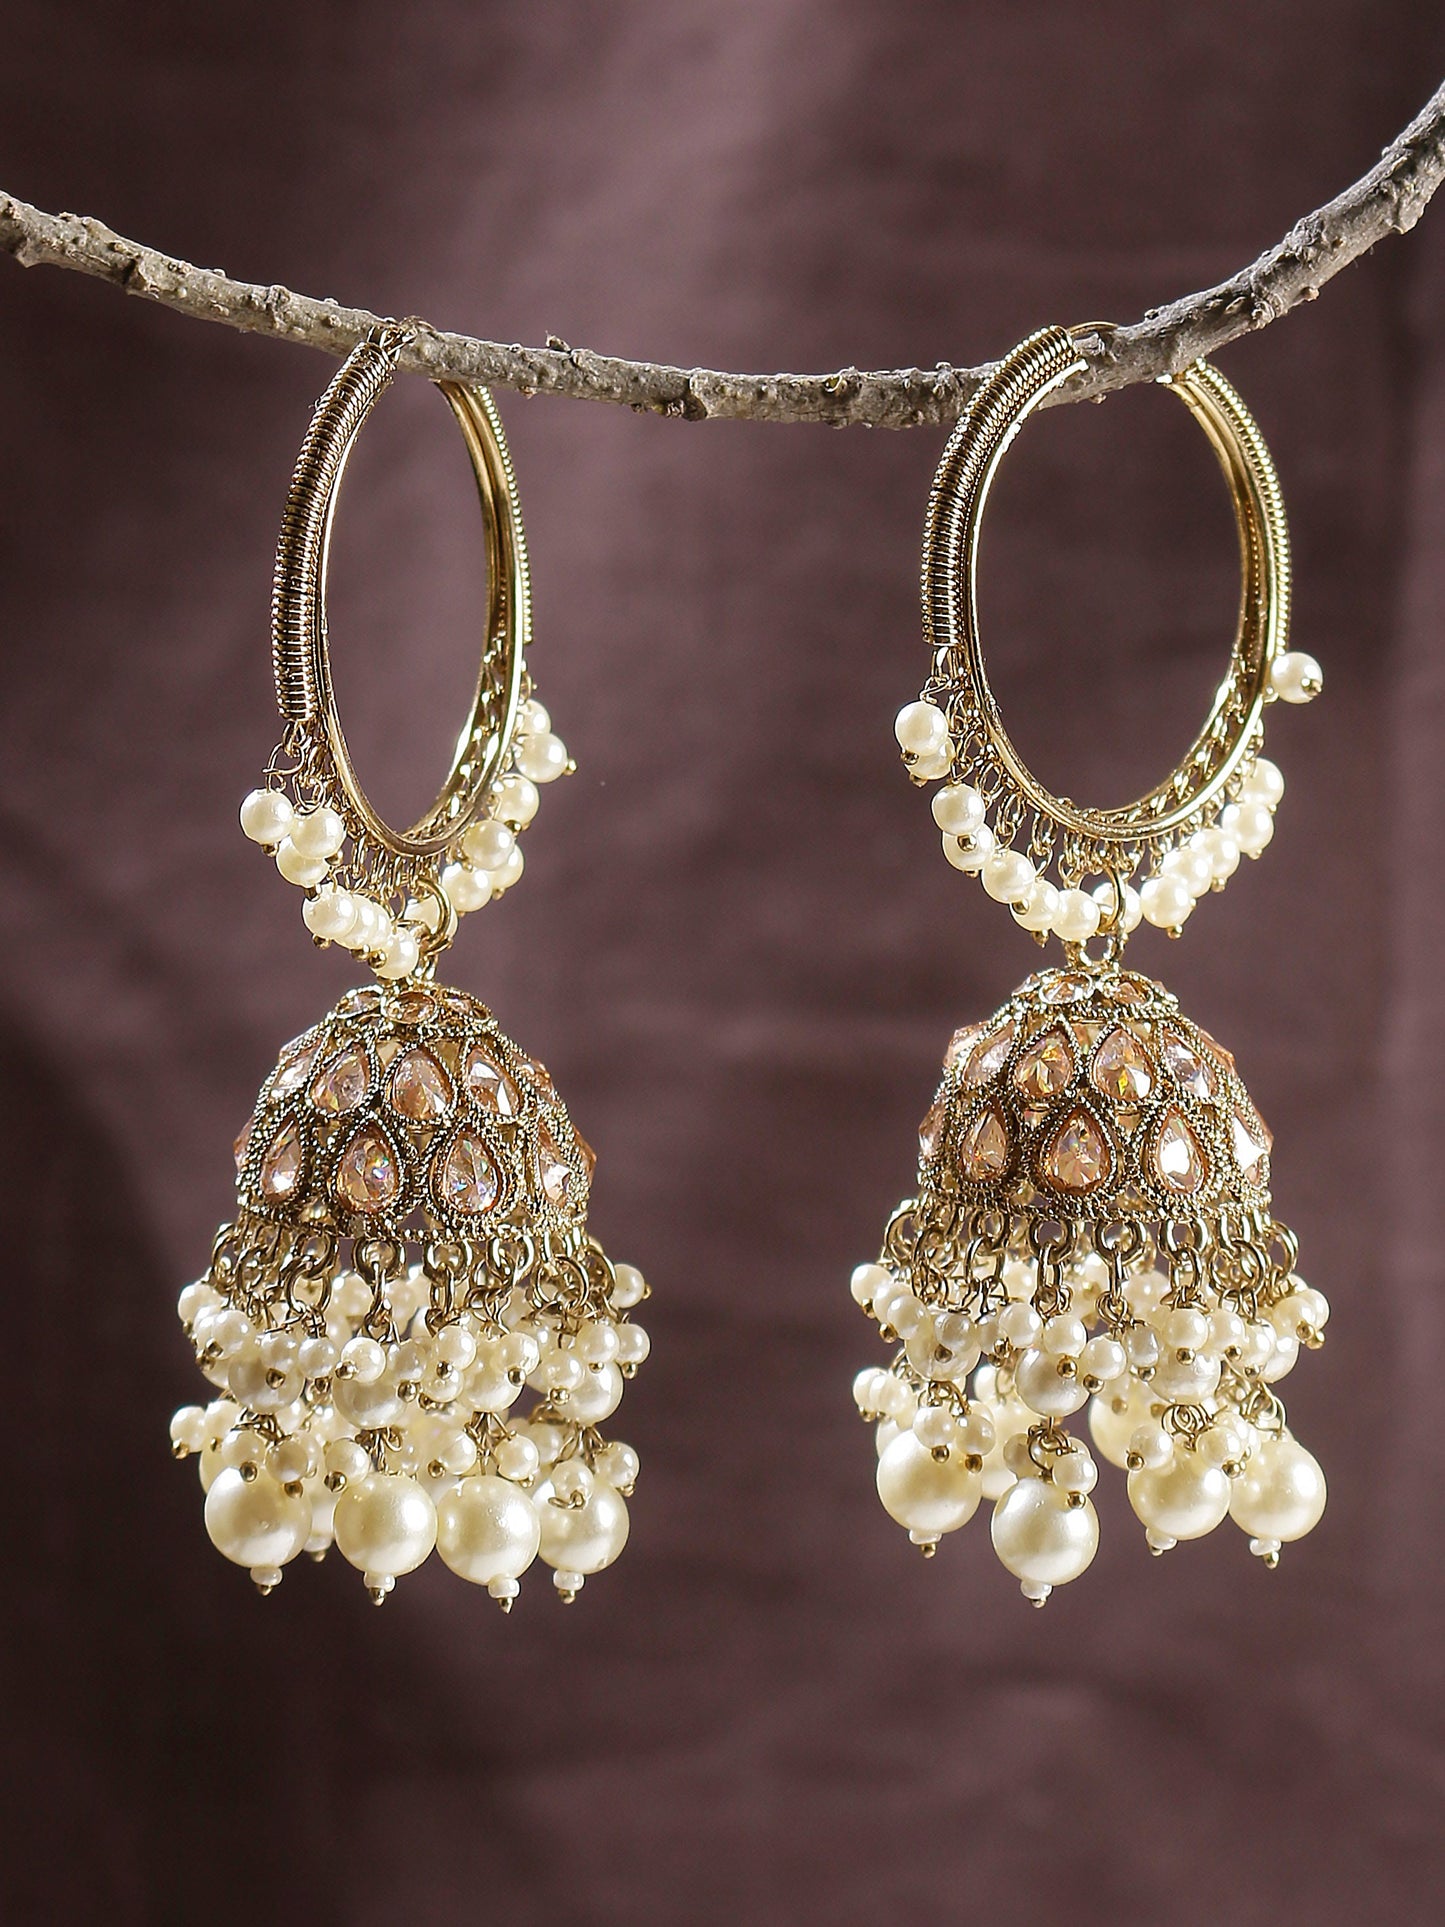 Swisni Alloy Alloy Golden Jhumki With White Pearl Earring For Women For Women|For Girls|Gifting|Anniversary|Birthday|Girlfriend